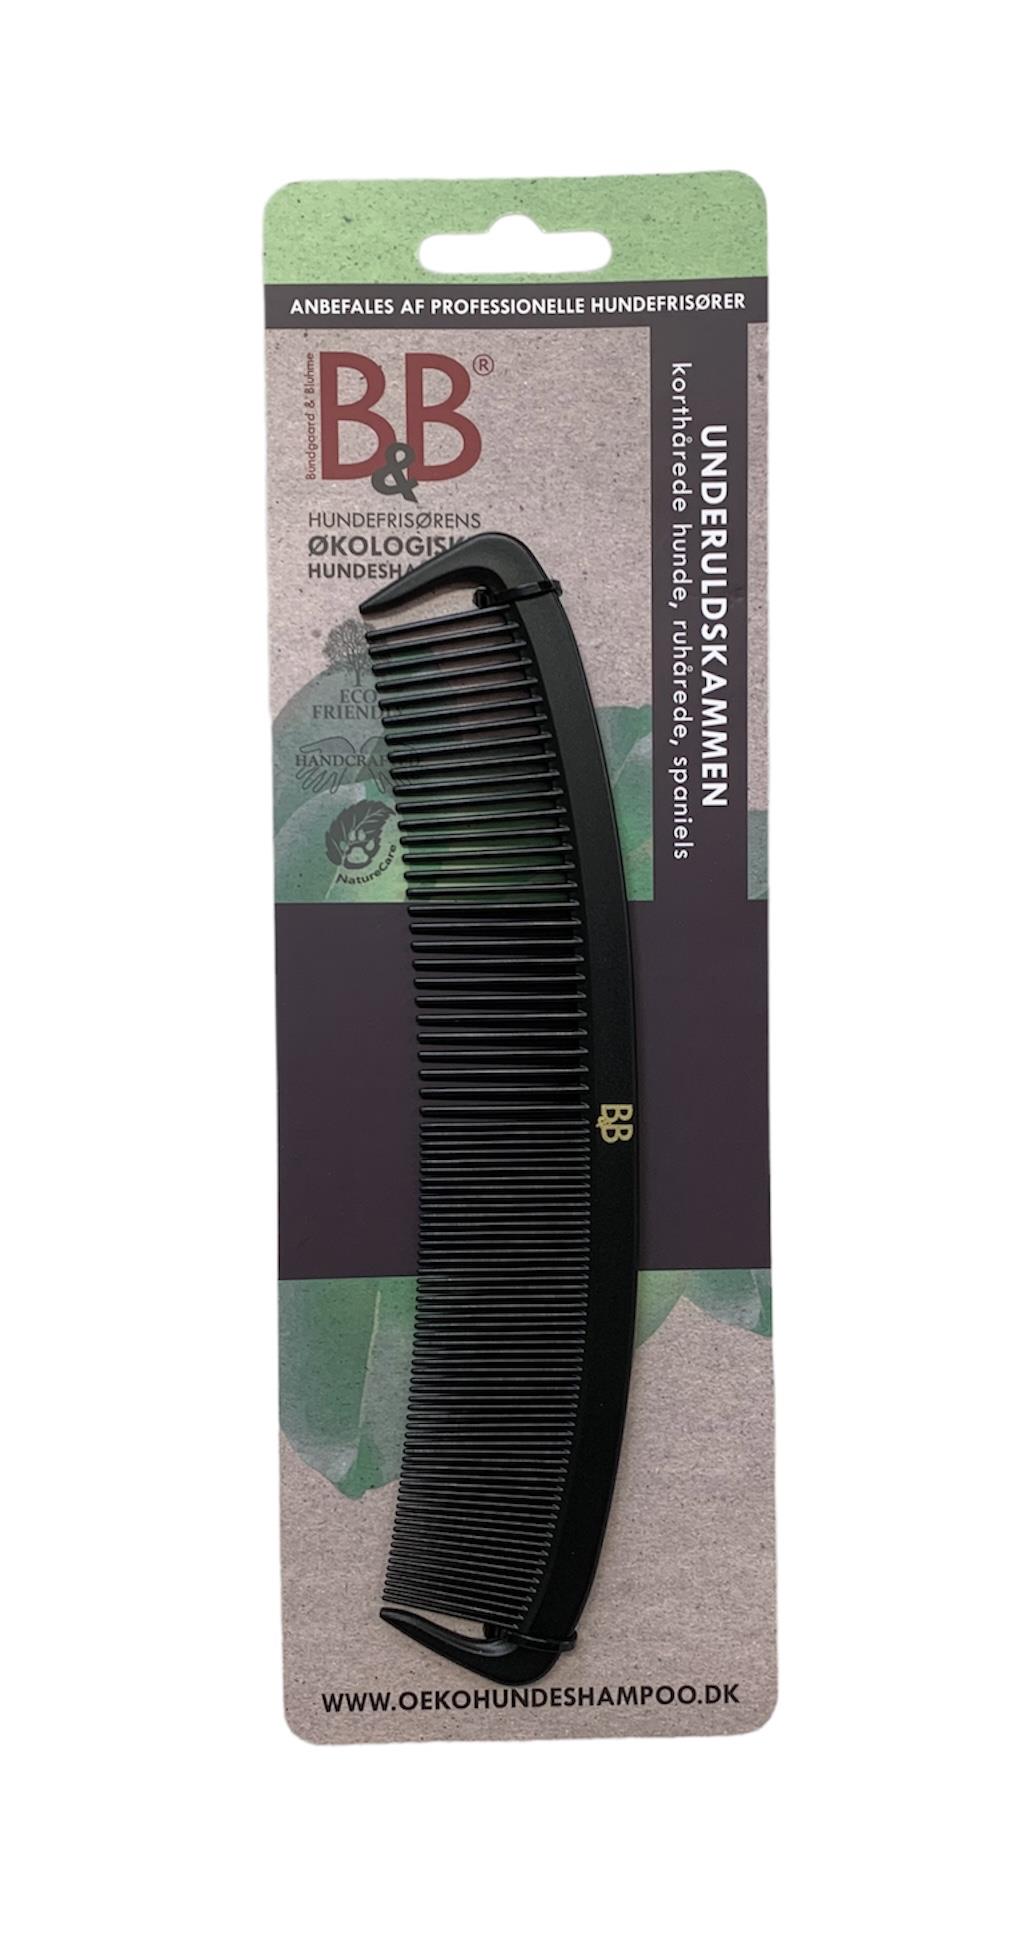 B&B - Deshedding comb 19cm - (9111) - Kjæledyr og utstyr